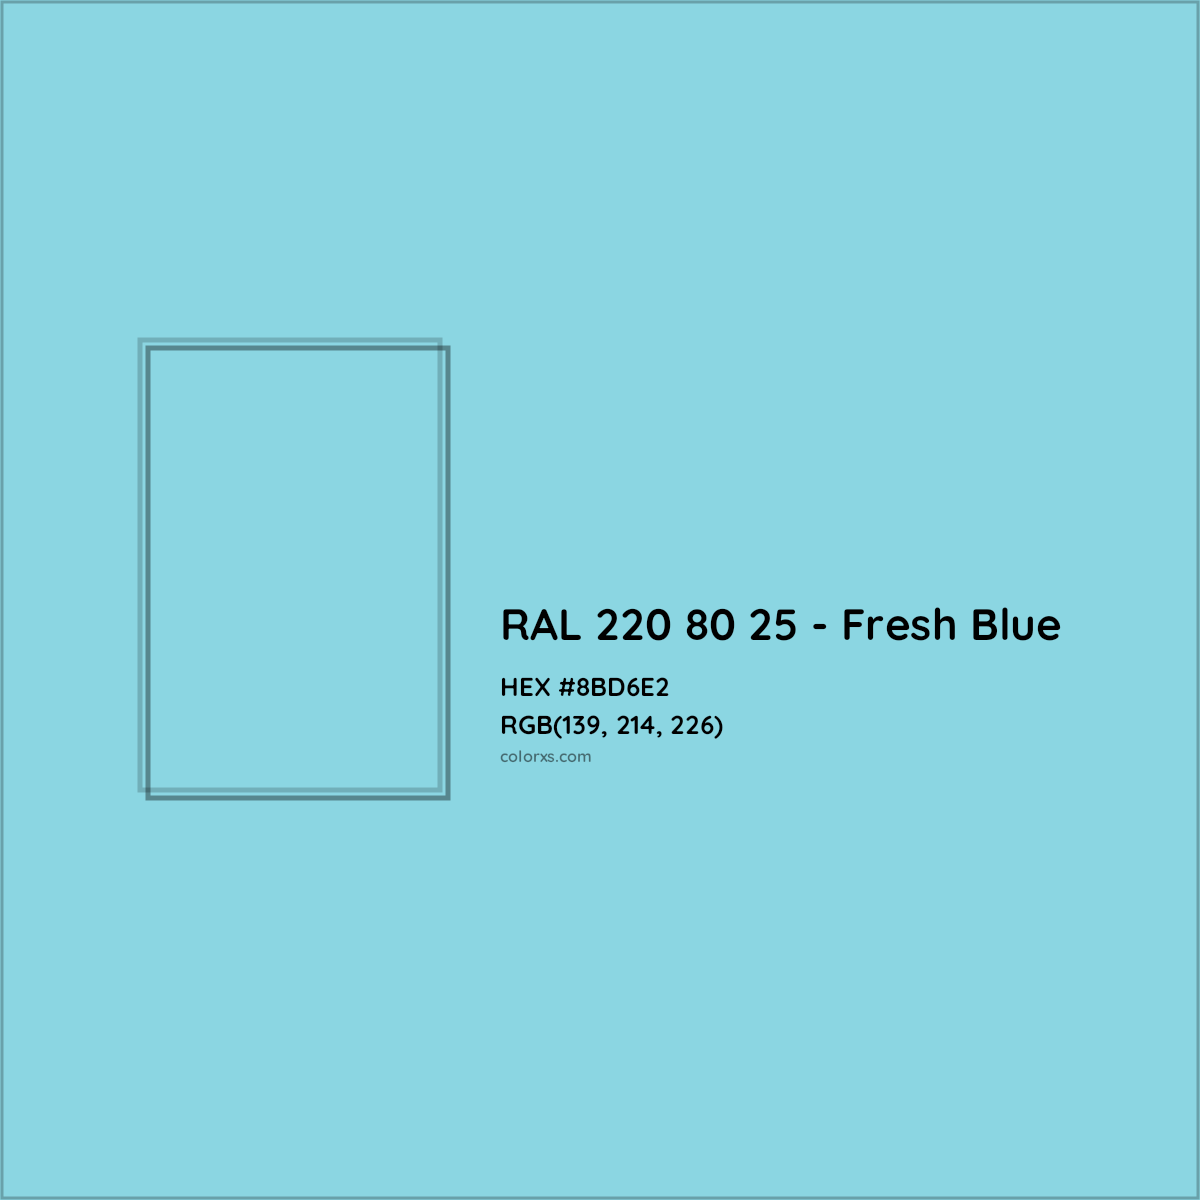 HEX #8BD6E2 RAL 220 80 25 - Fresh Blue CMS RAL Design - Color Code